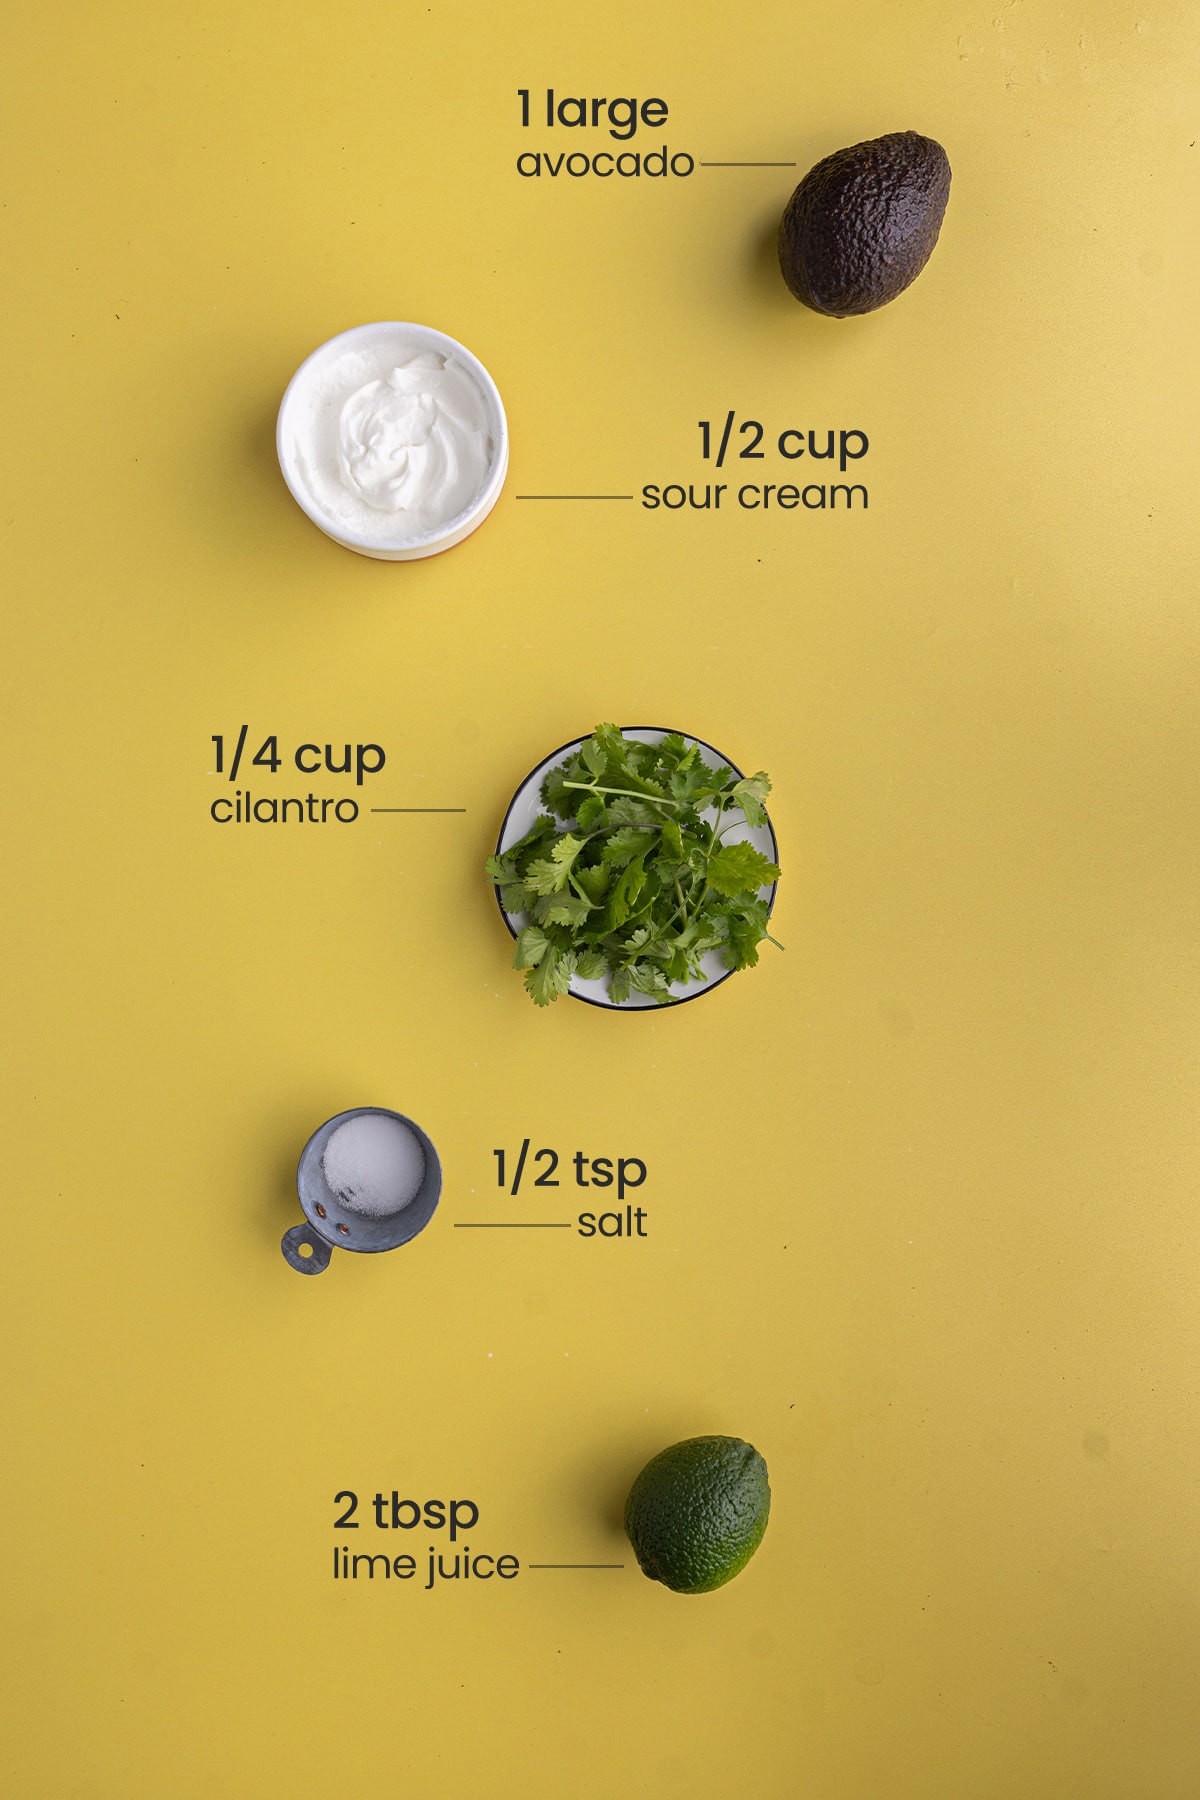 ingredients for avocado crema to put on sweet potato quinoa bowl - avocado, sour cream, cilantro, salt, lime juice